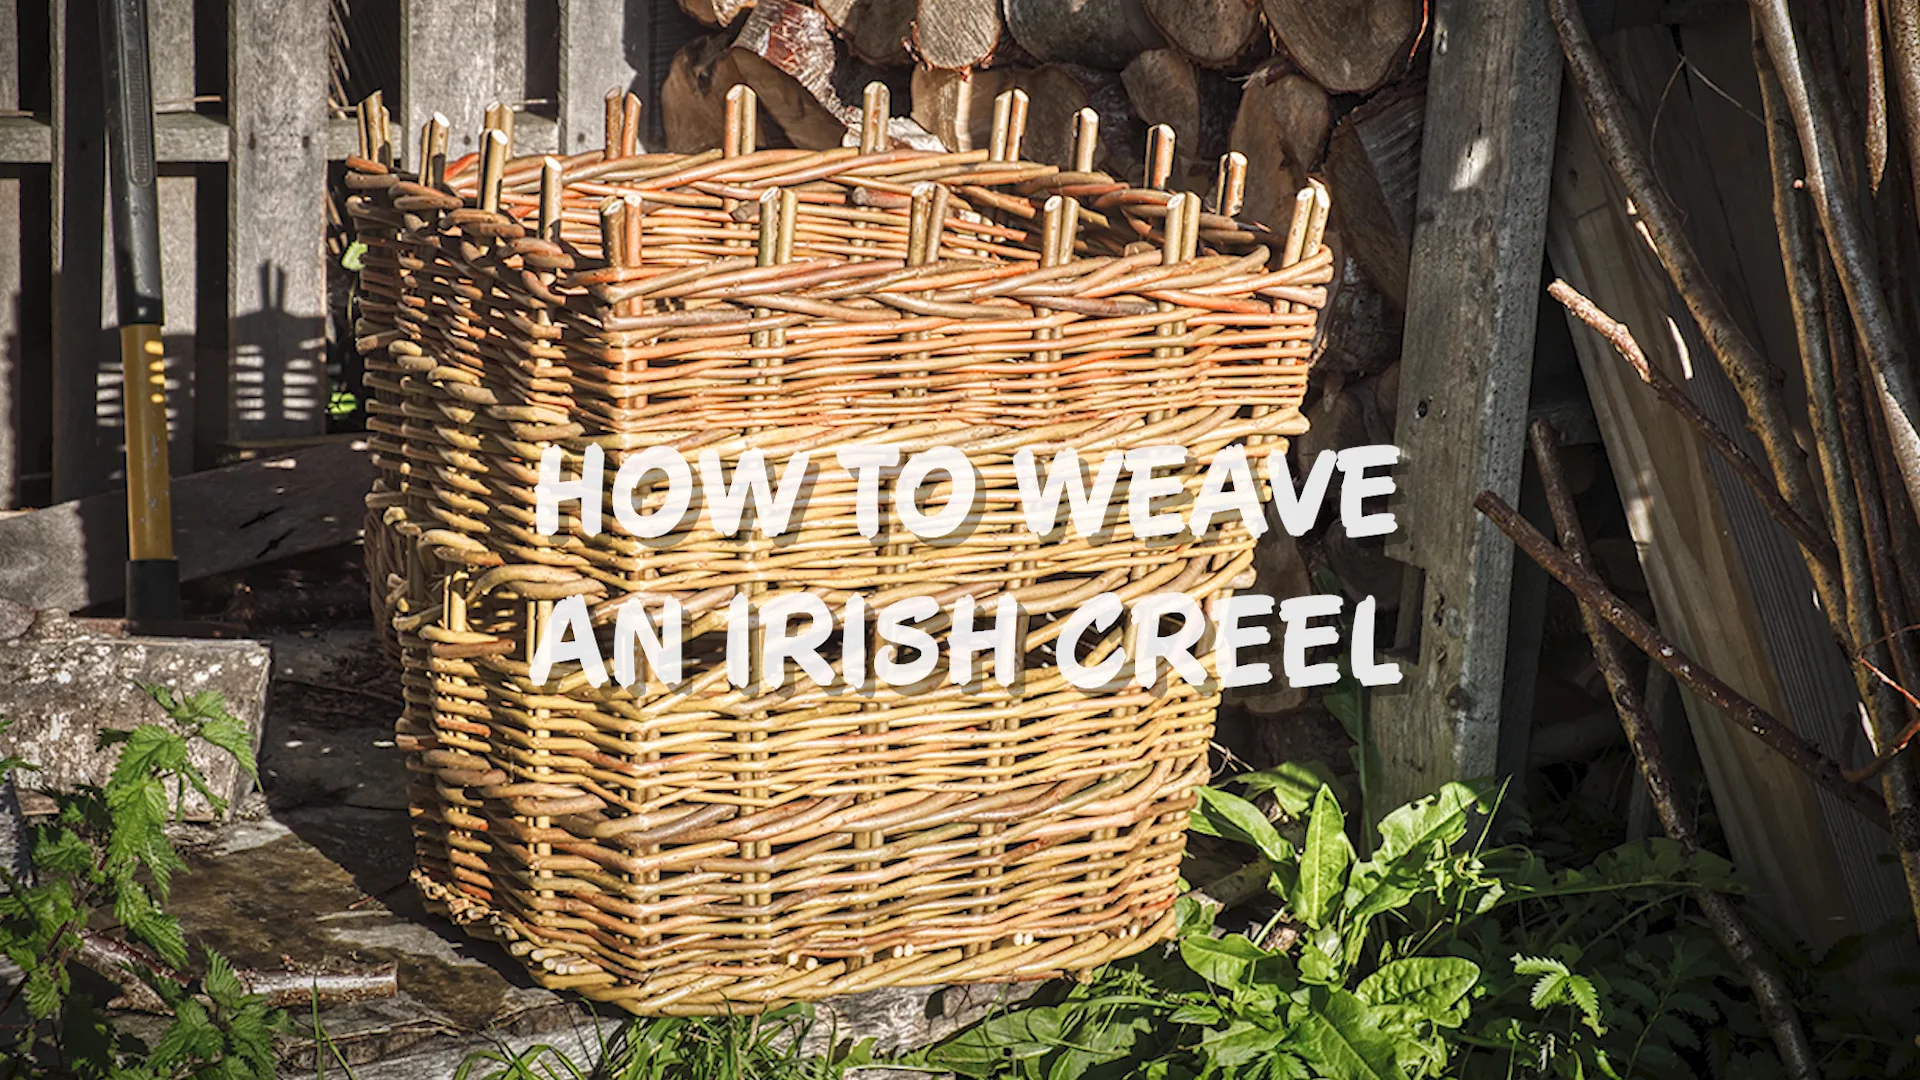 Watch How To Weave An Irish Creel Basket Online